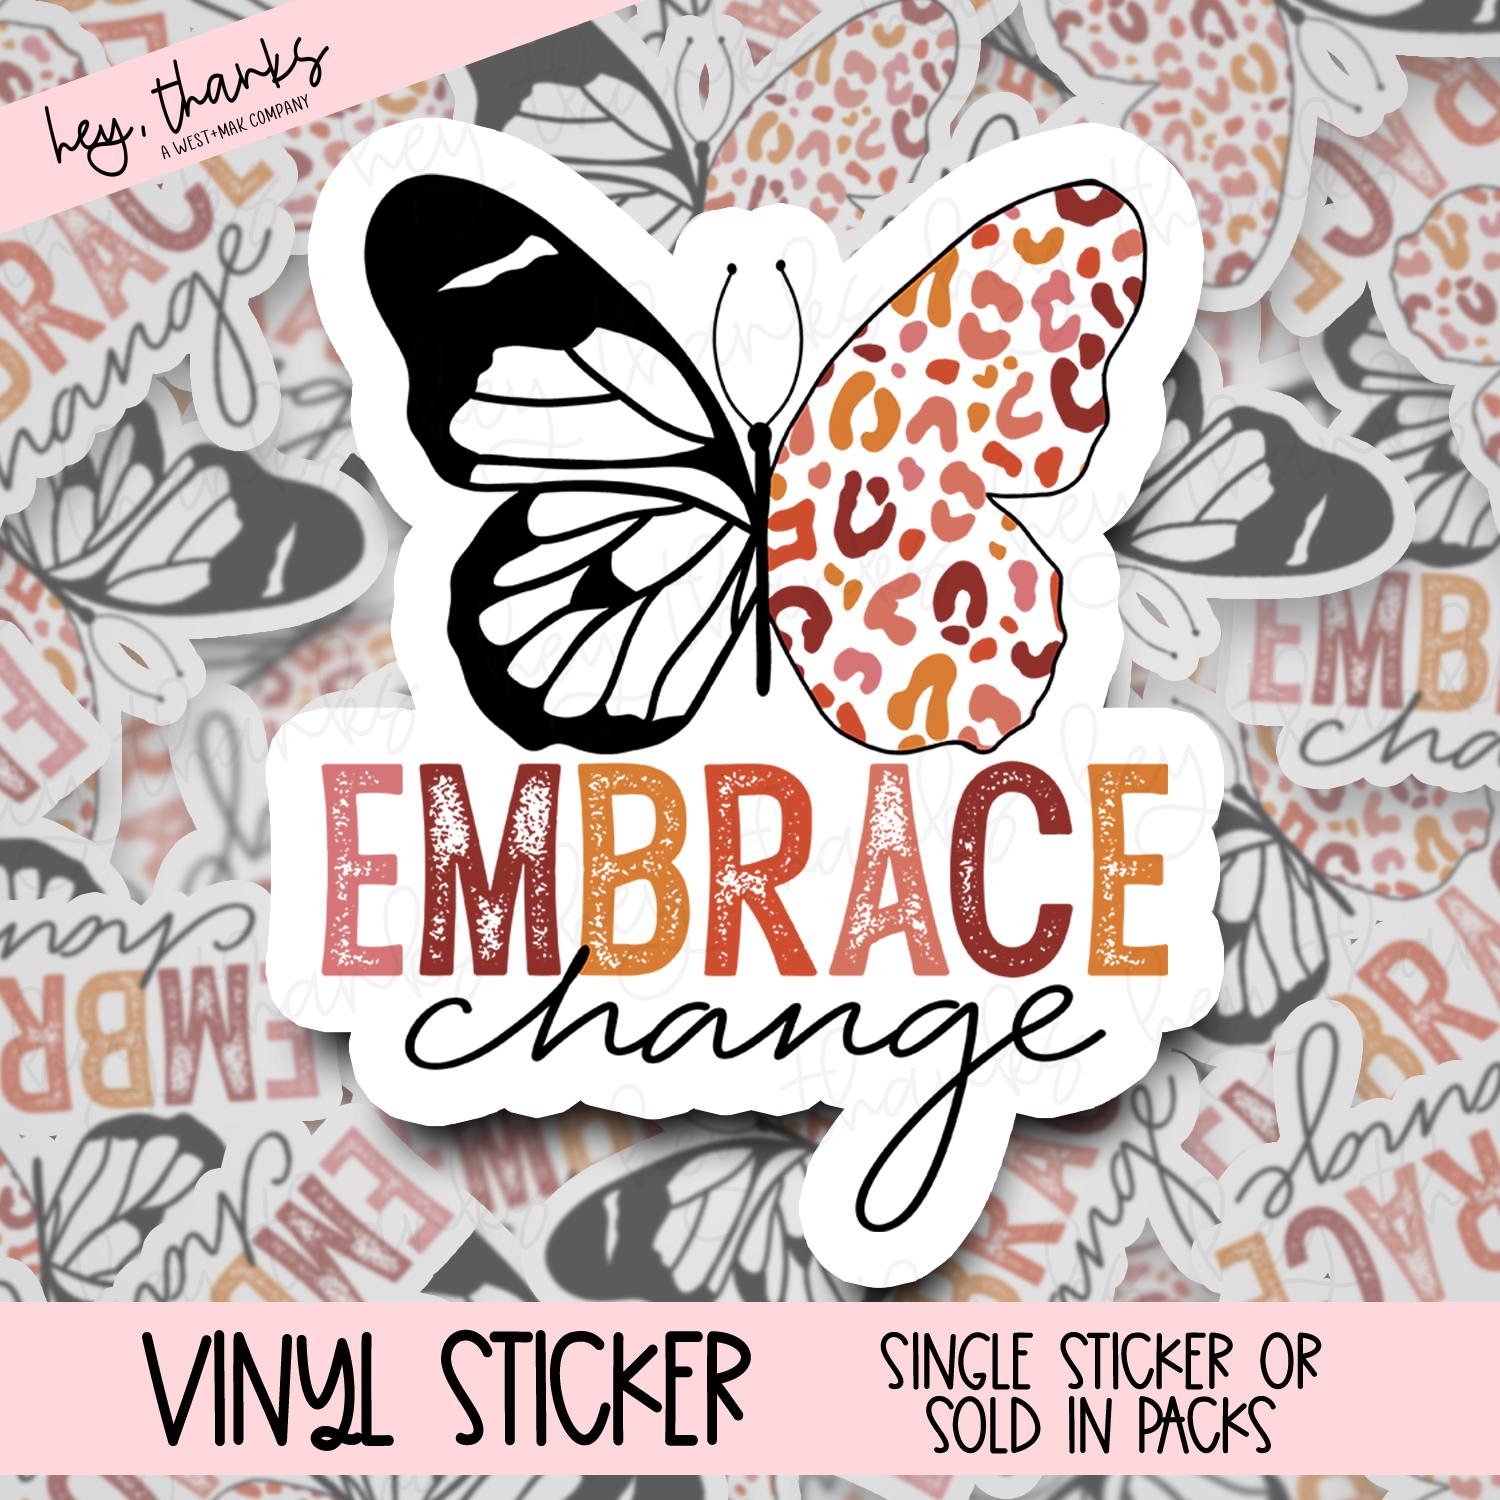 Embrace Change - Vinyl Sticker